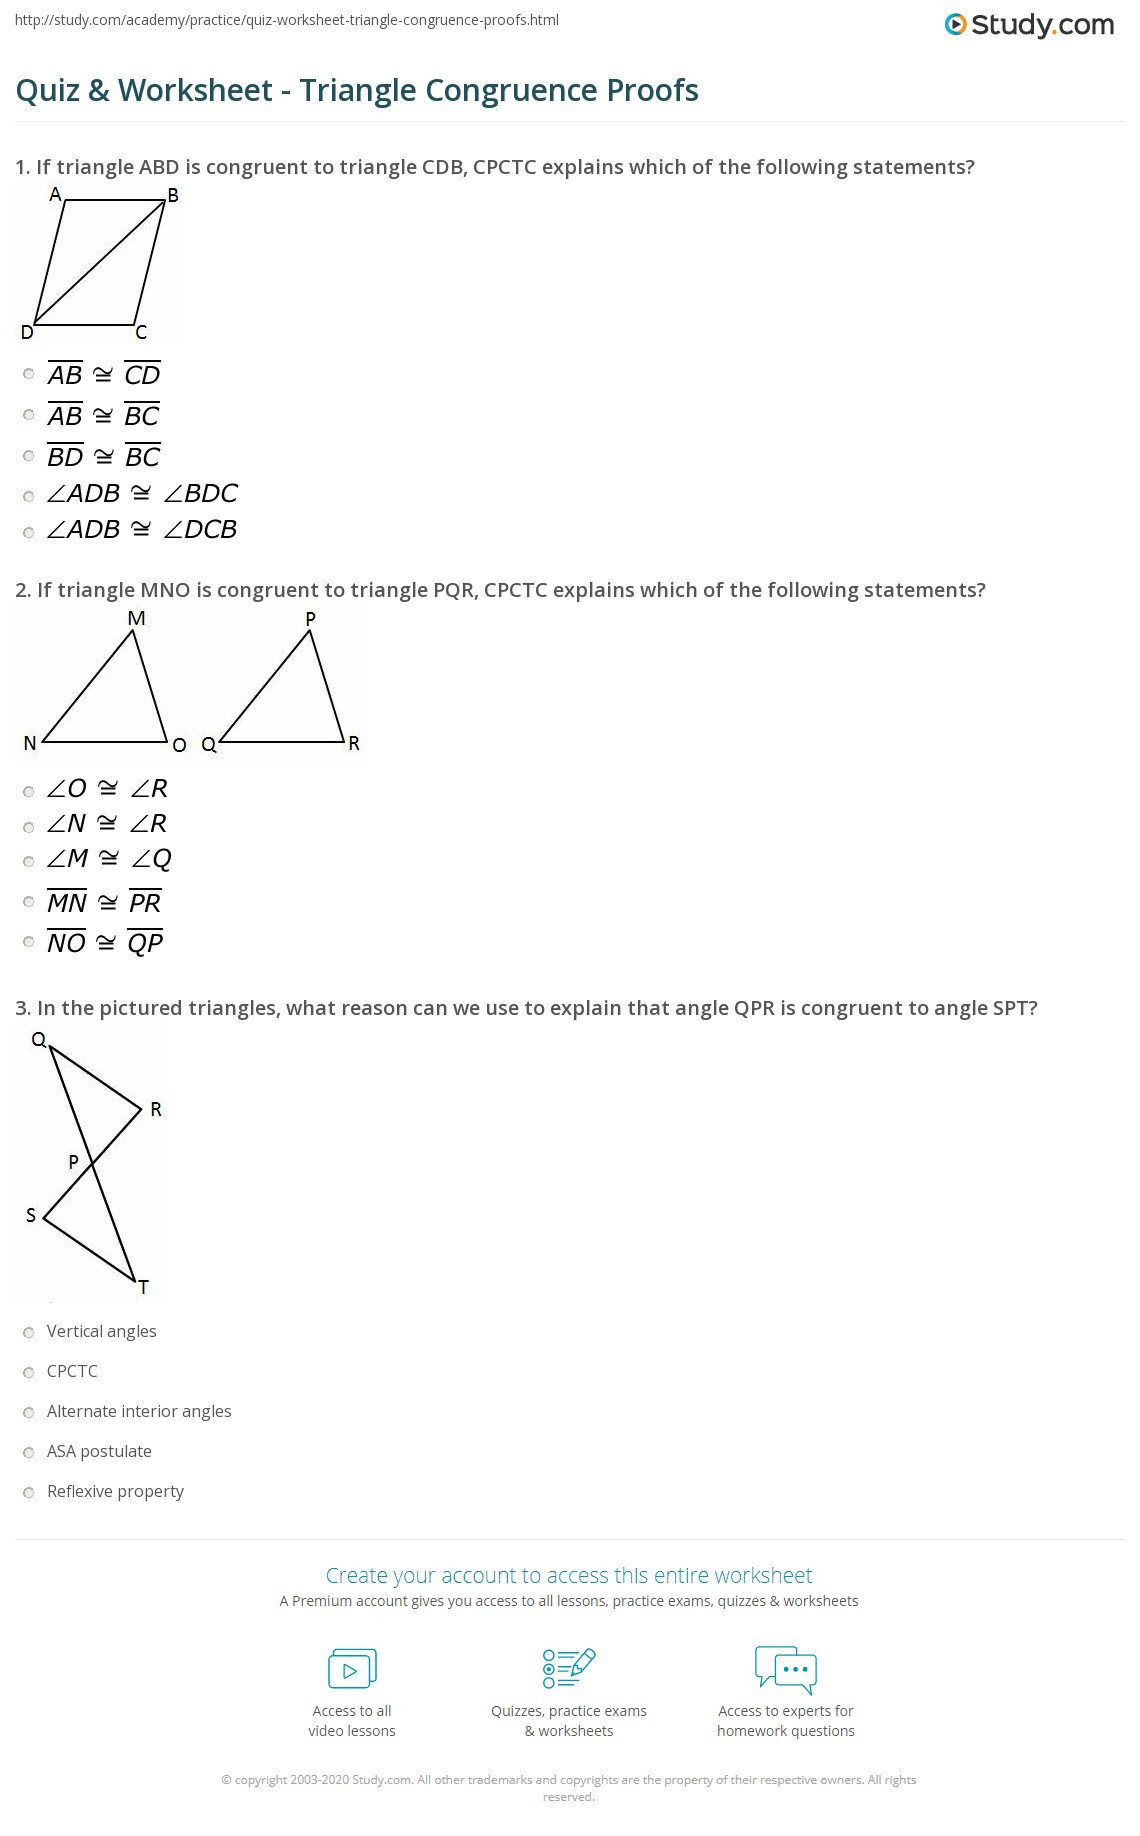 Triangle Congruence Proof Worksheet Quiz &amp; Worksheet Triangle Congruence Proofs